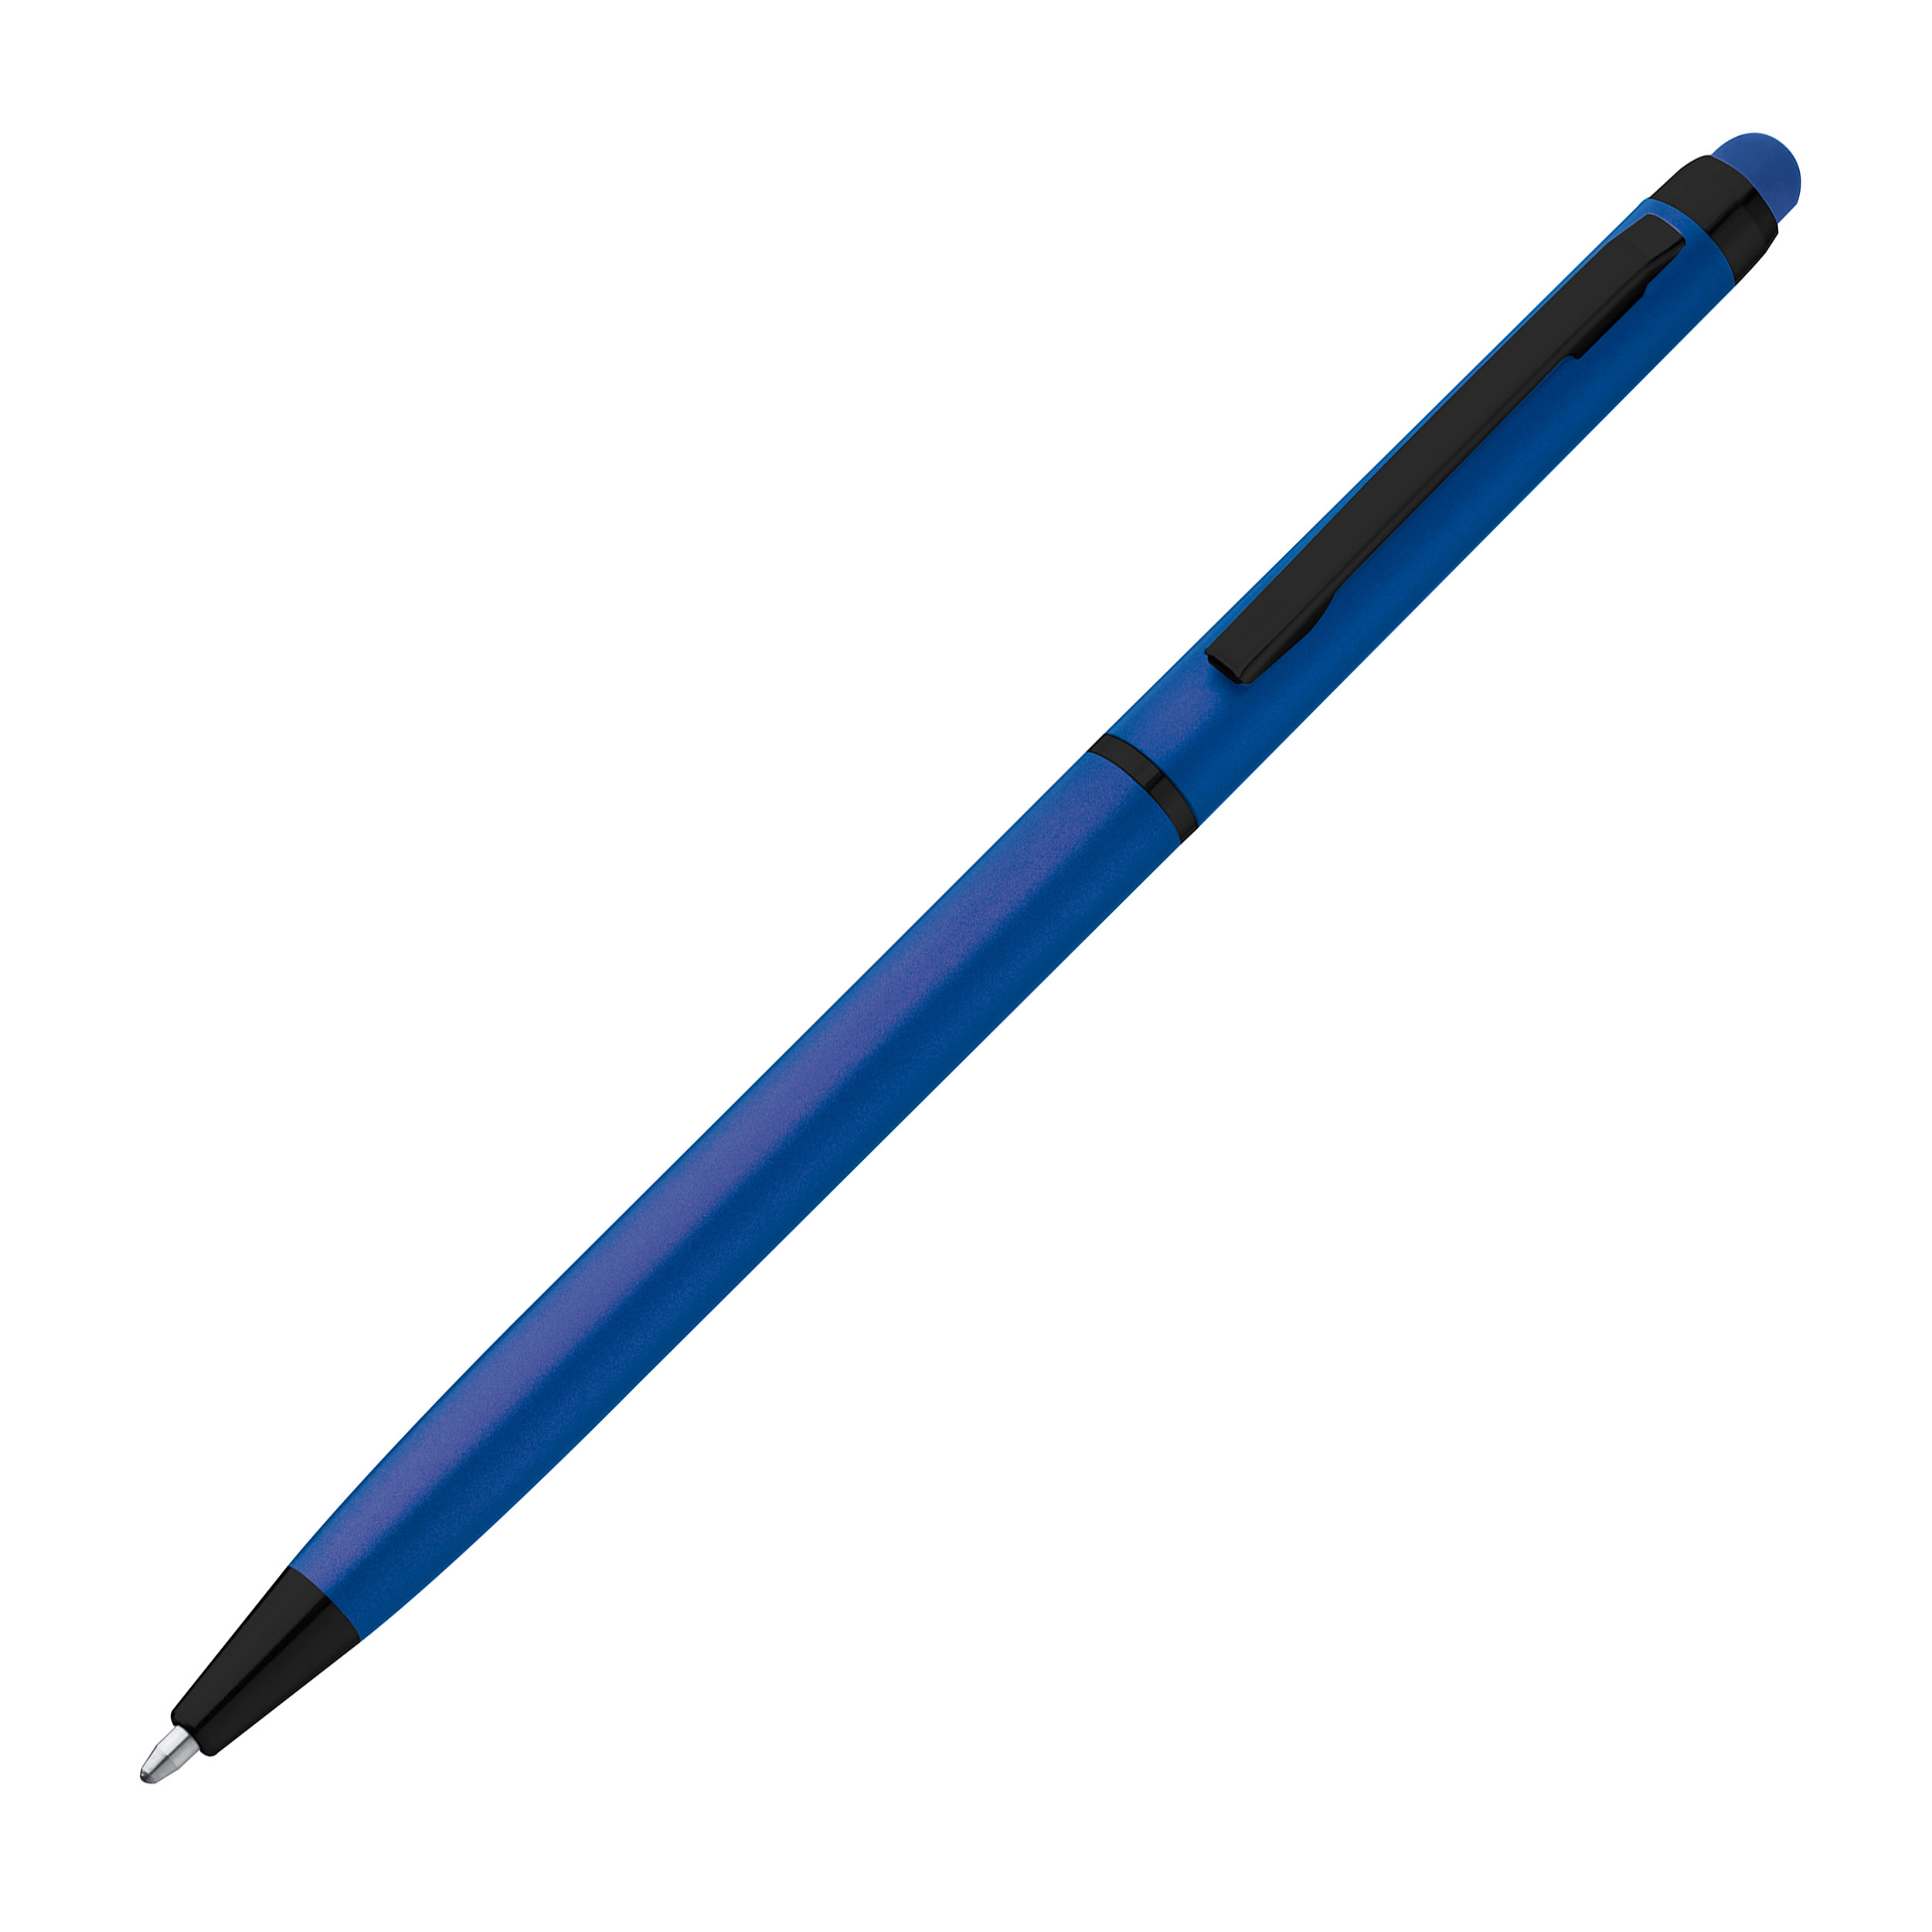 TouchWrite Metal Ballpoint Pen - Appledore - Caldicot